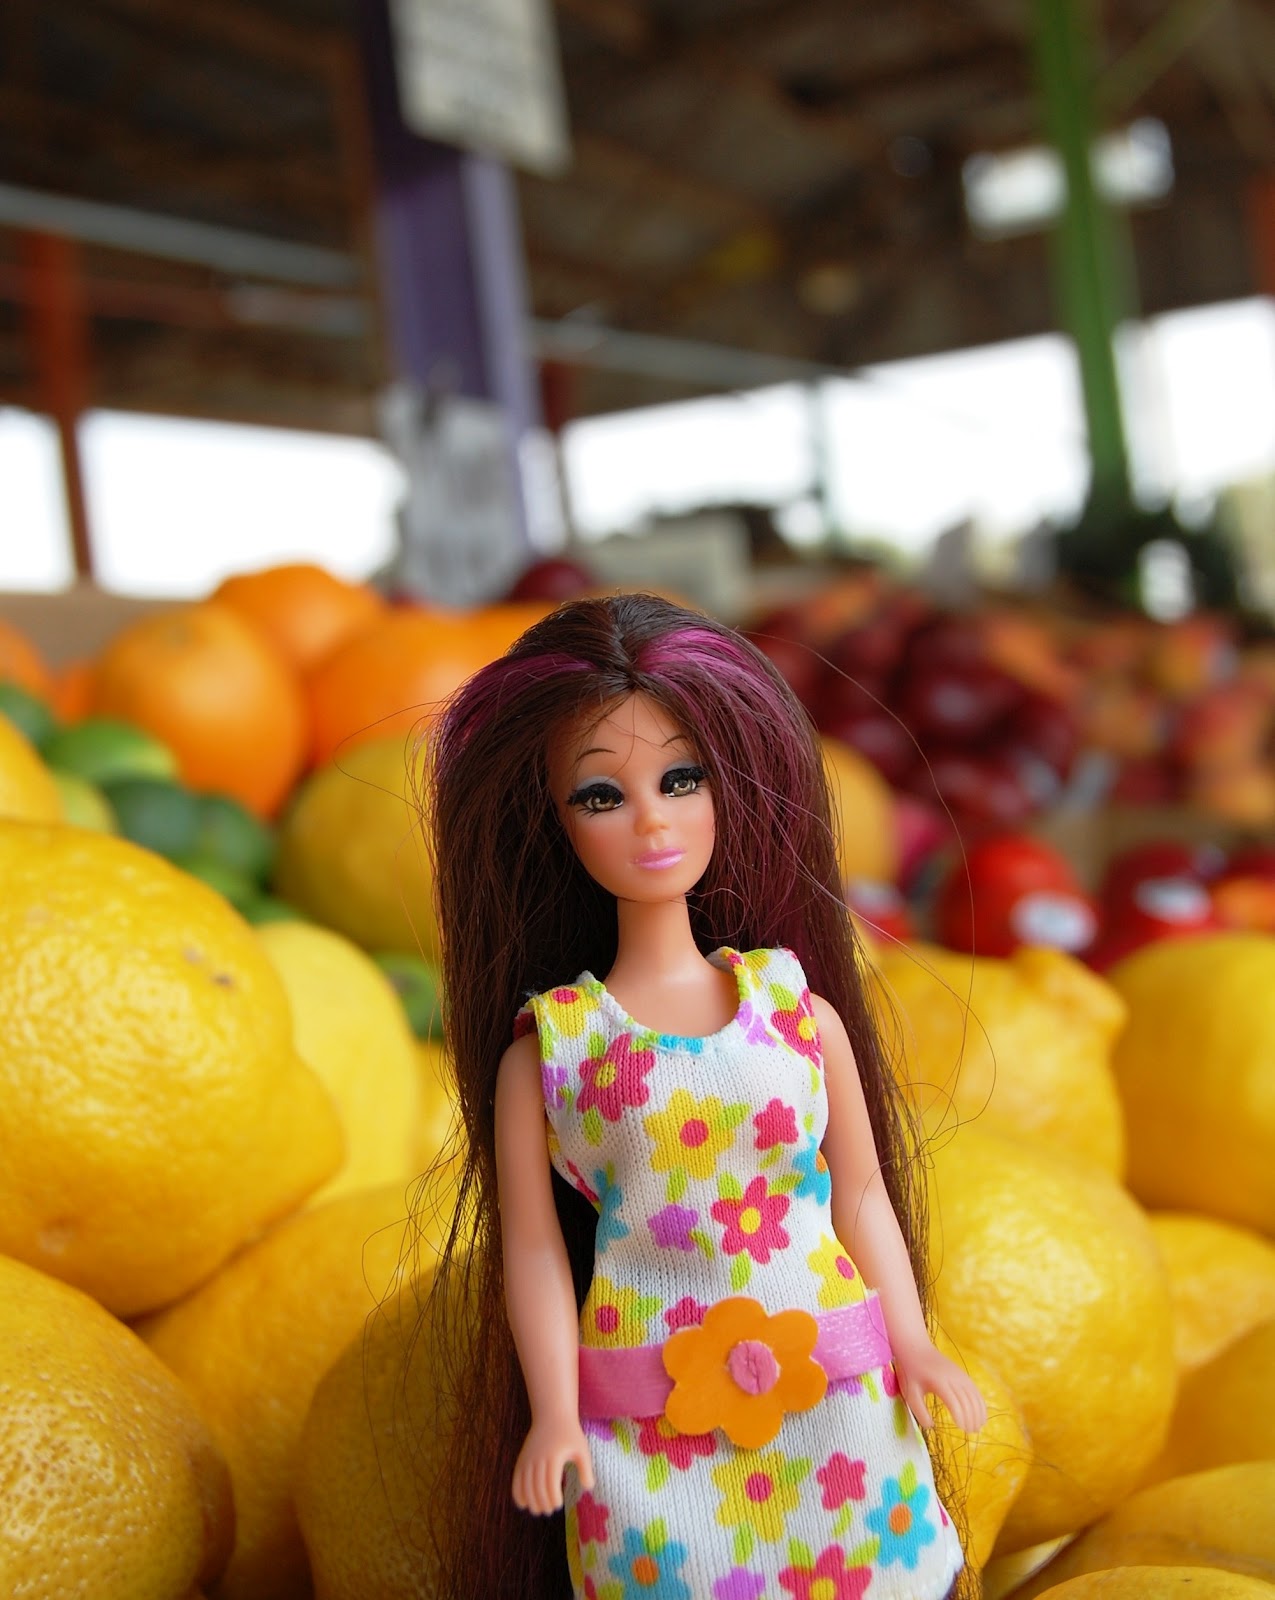 Angie of the Fab Fashion Fun Dawn line | Visiting the OKC Farmer's Market